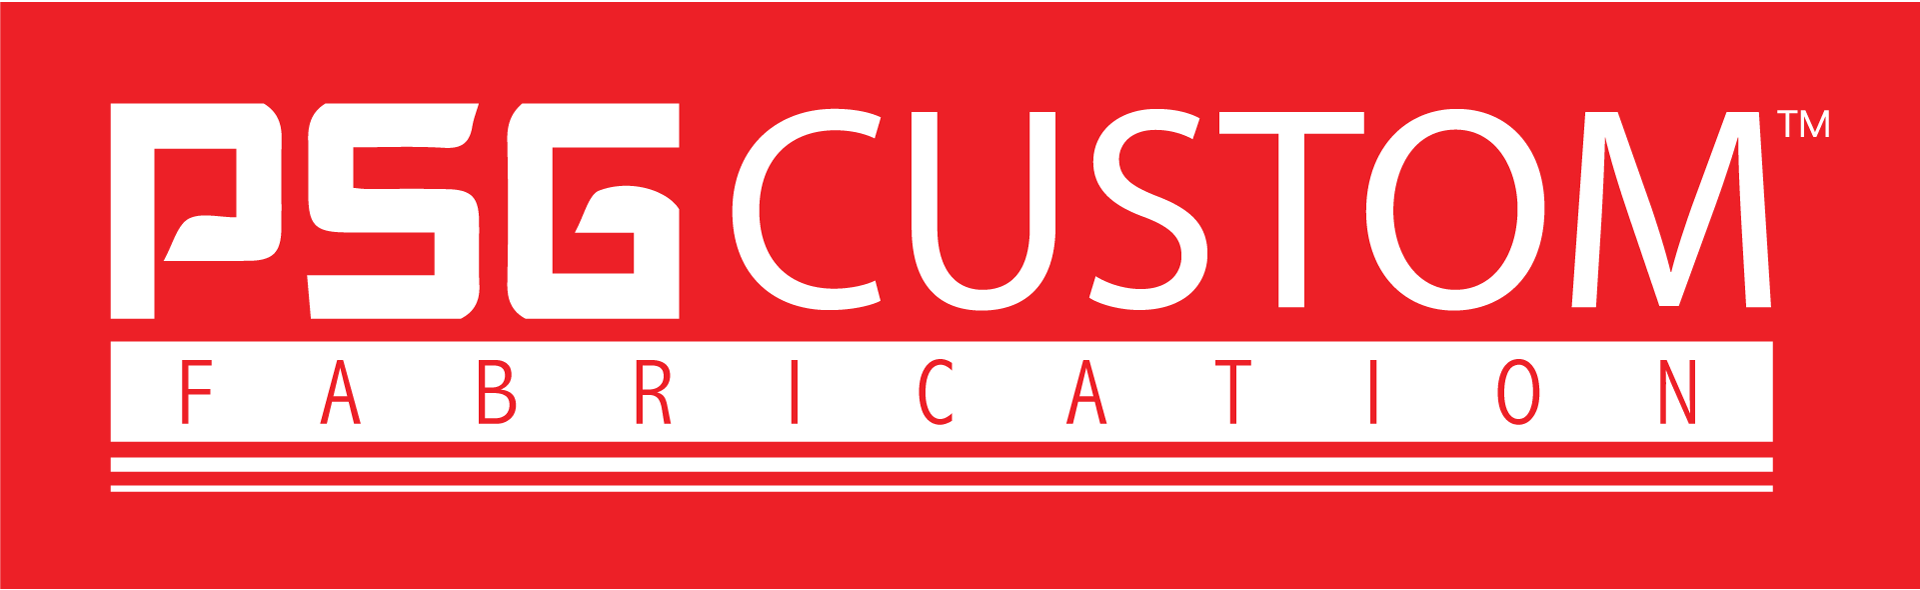 PSG Custom Fabrication Red Reverse logo